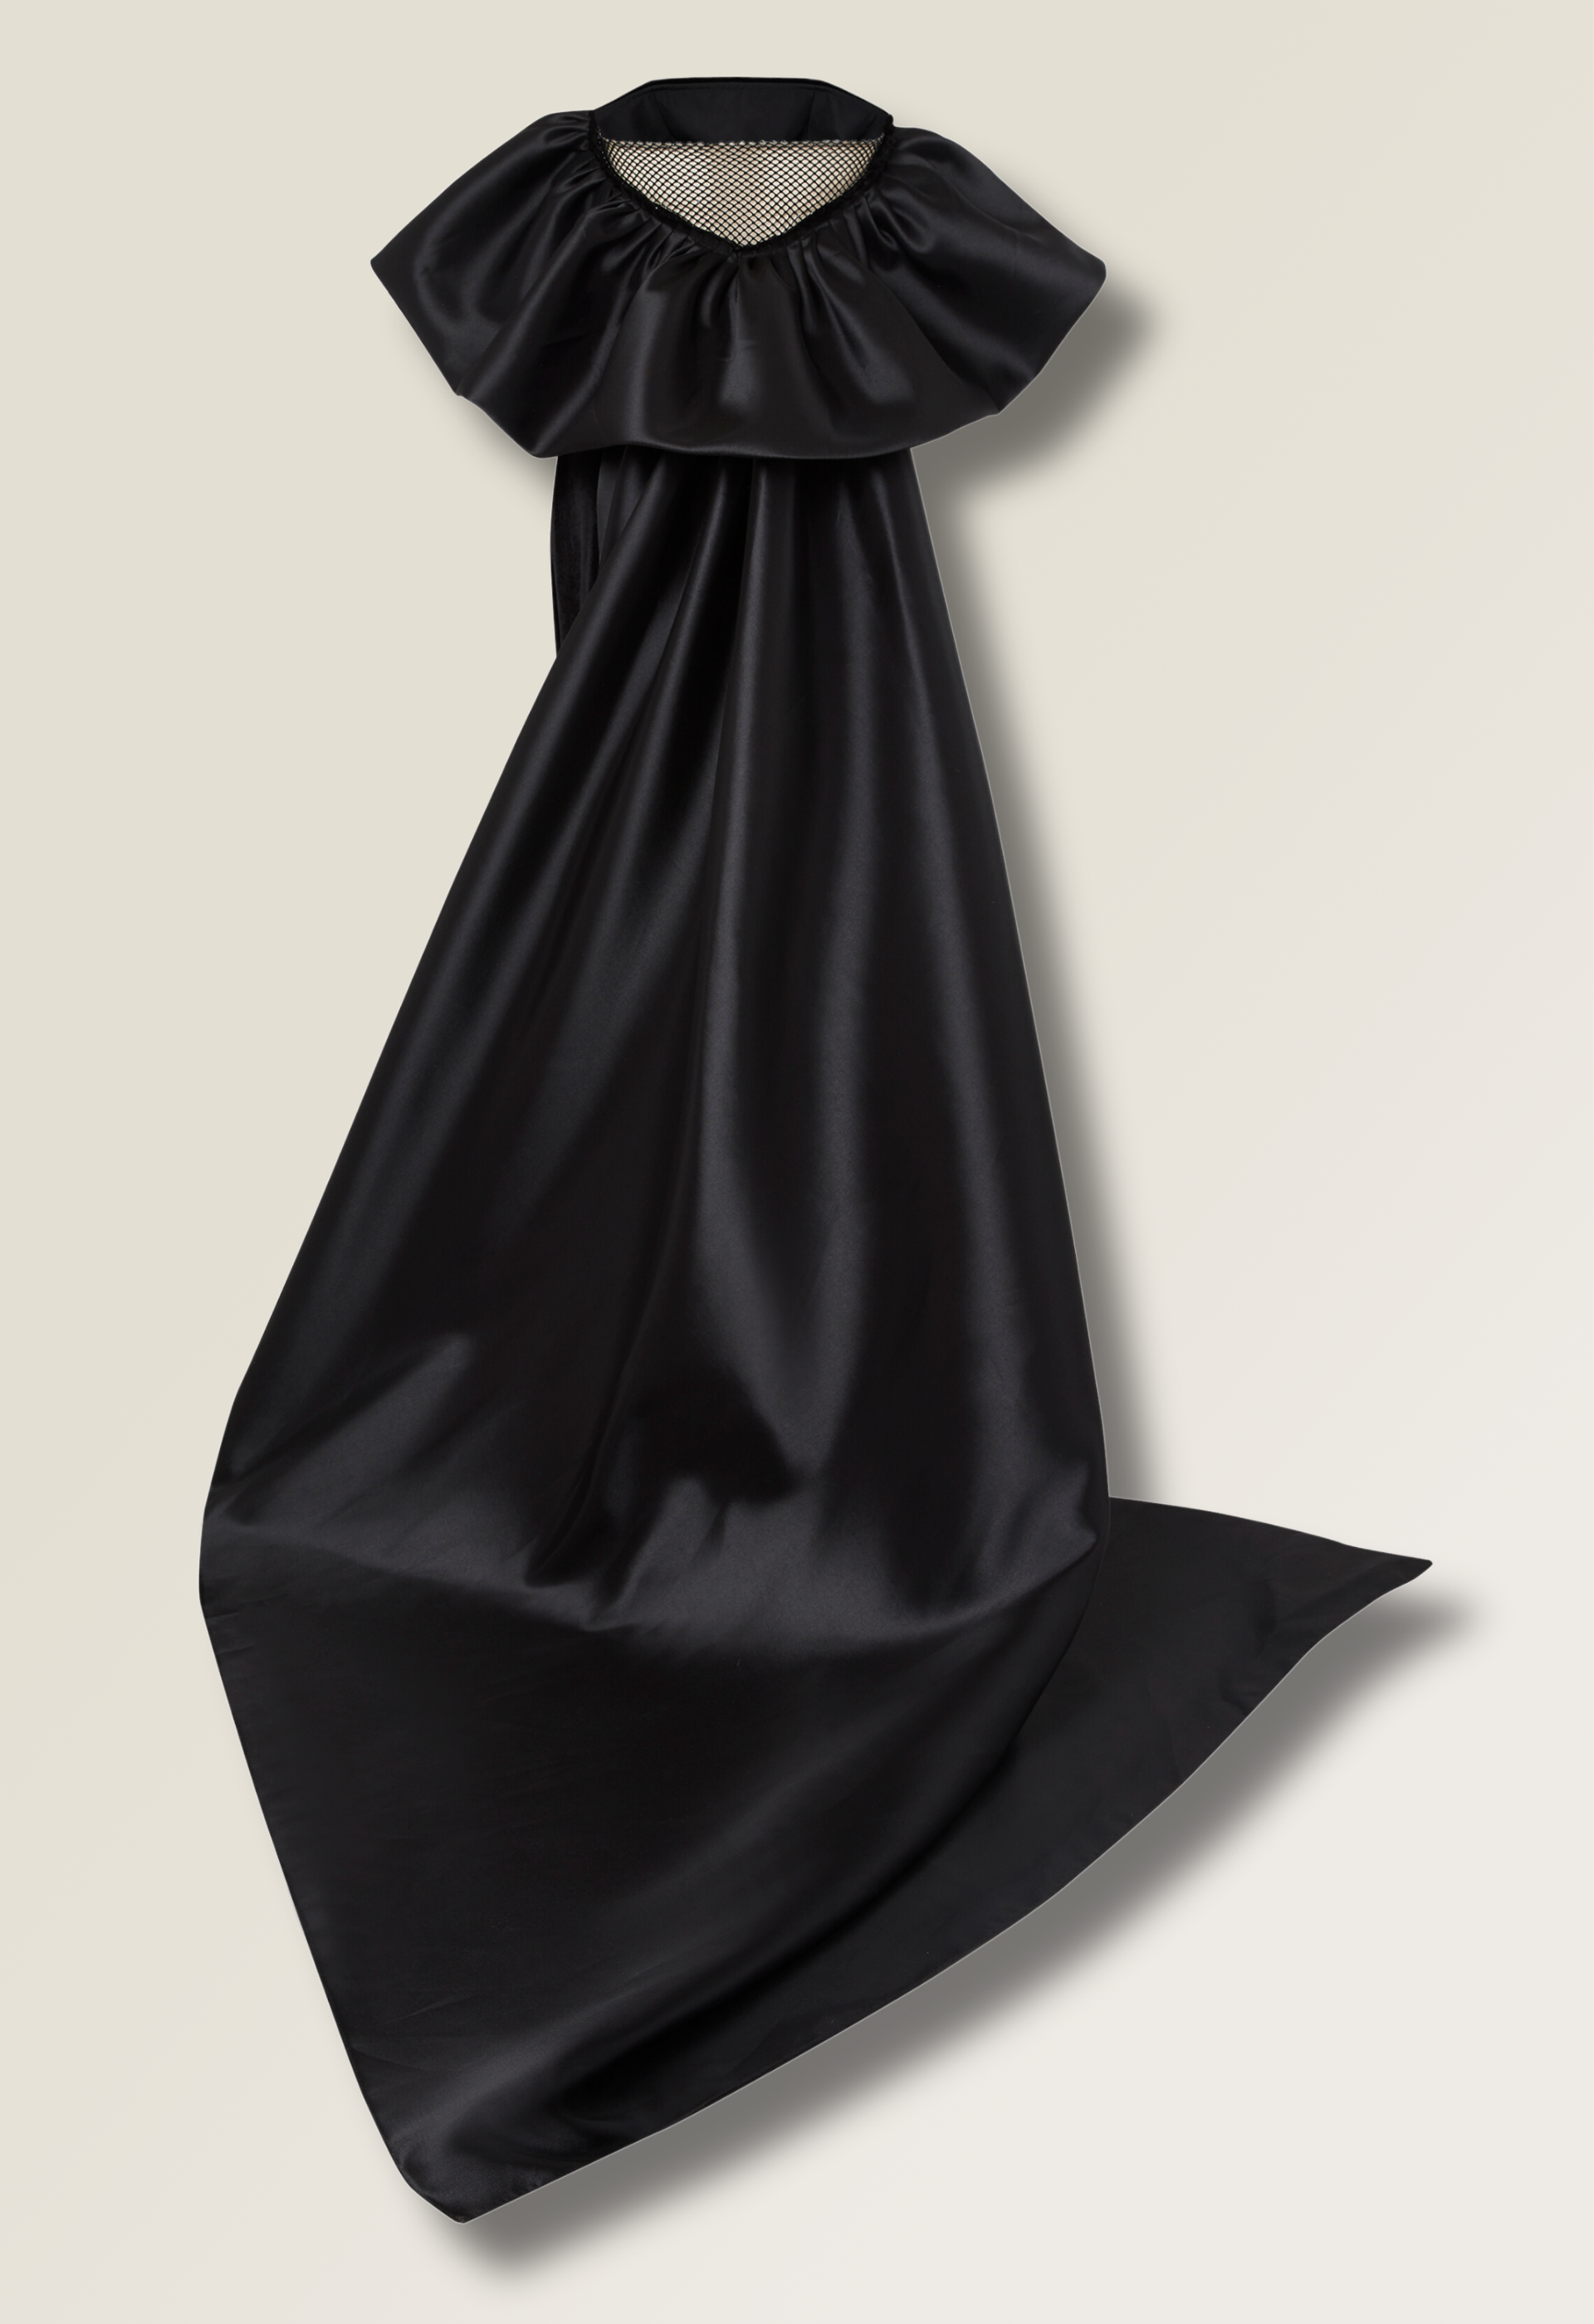 Velvet dress with statement train